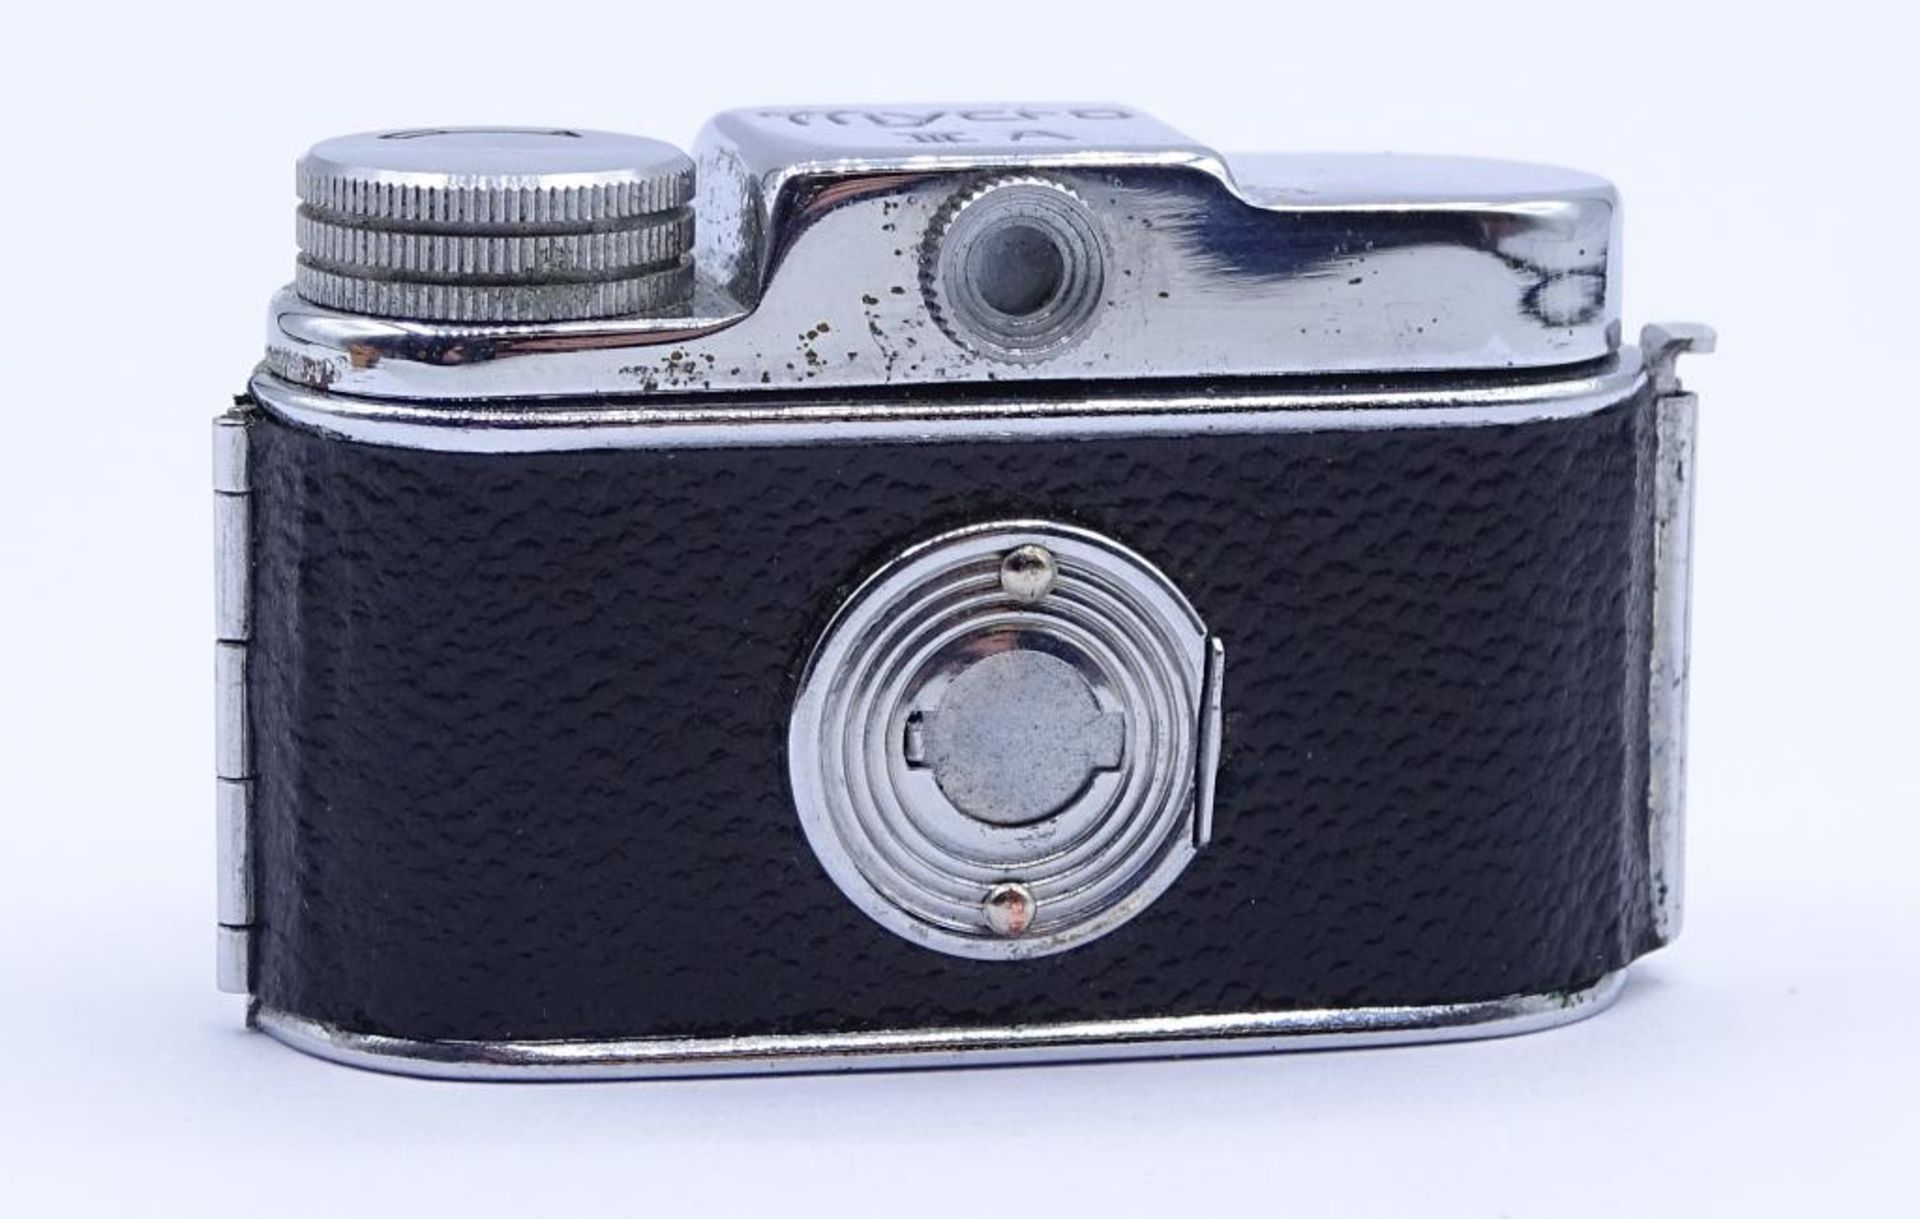 Mycro IIIA Miniatur Kamera in orig. Ledertasche, ca. 3x6 cm, gut erhalten - Bild 4 aus 4